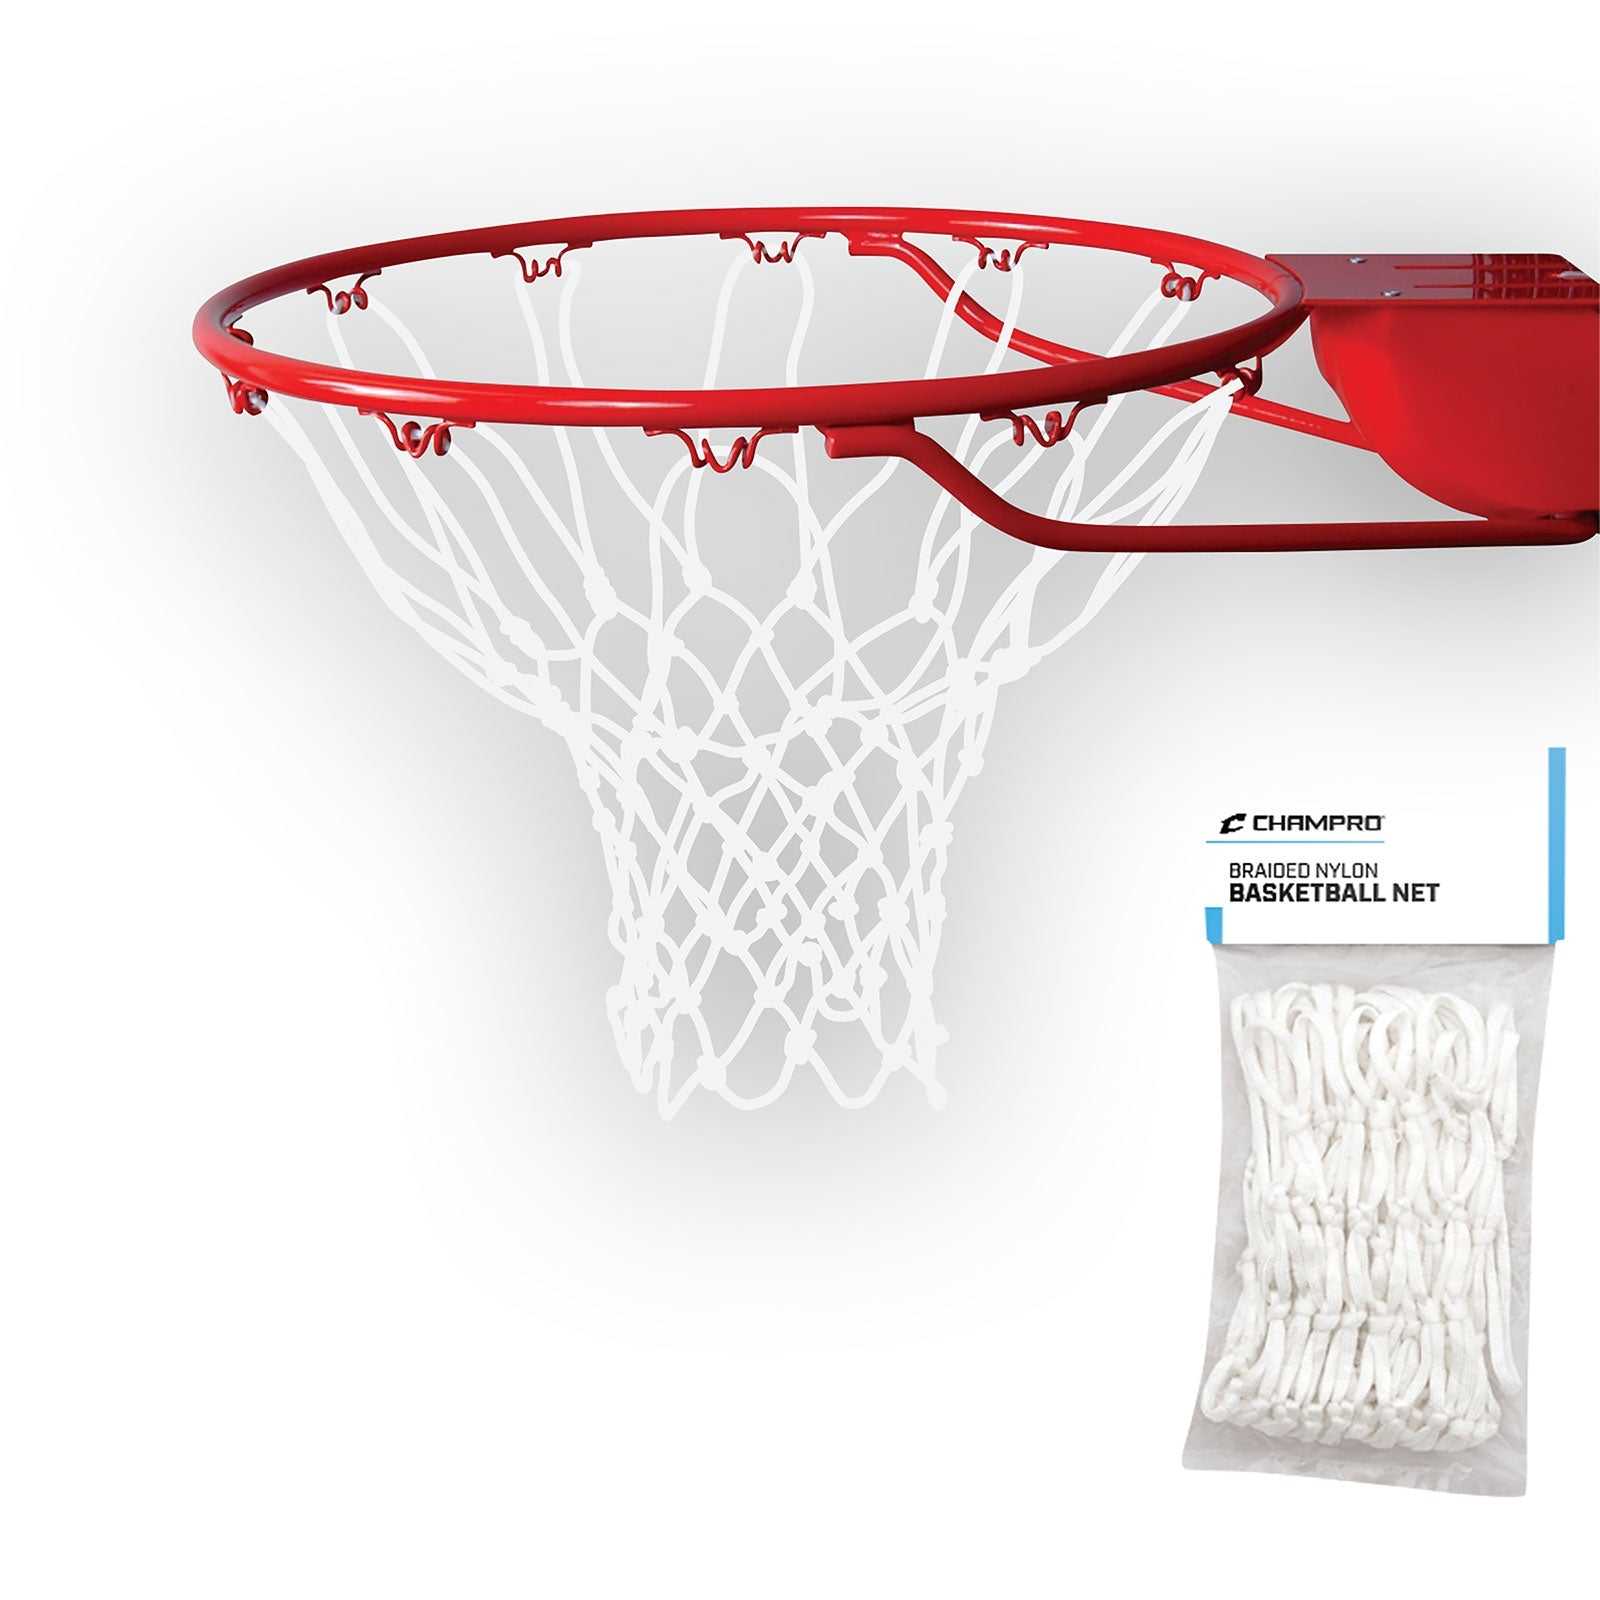 Champro NG03 Basketball Net Braided Nylon - White - HIT a Double